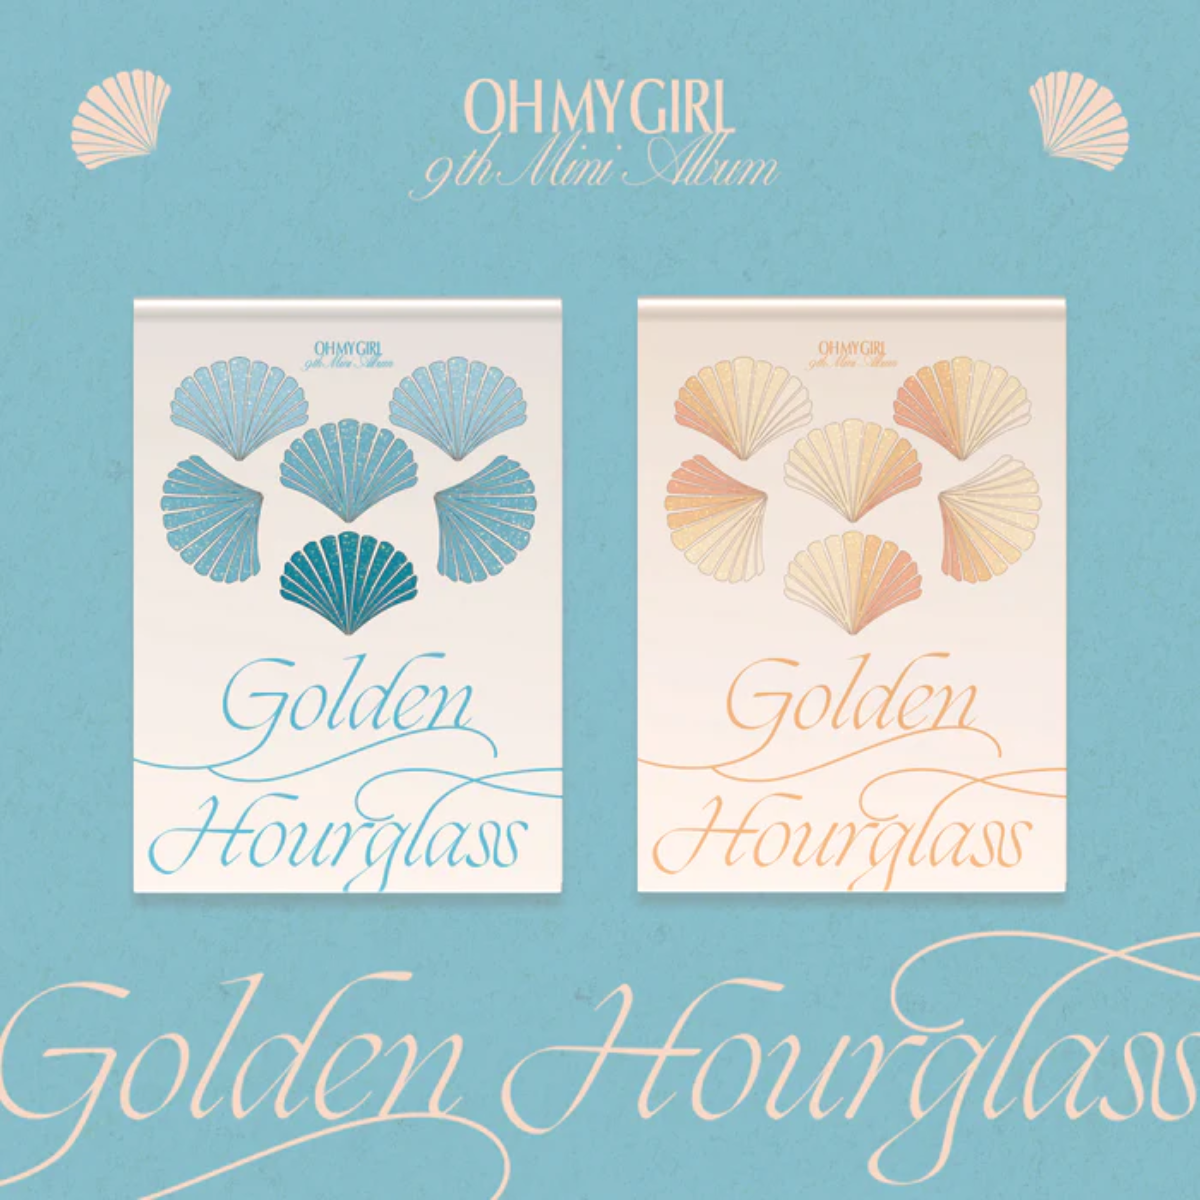 OH MY GIRL Mini Vol. 9 - Golden Hourglass [Random Cover]